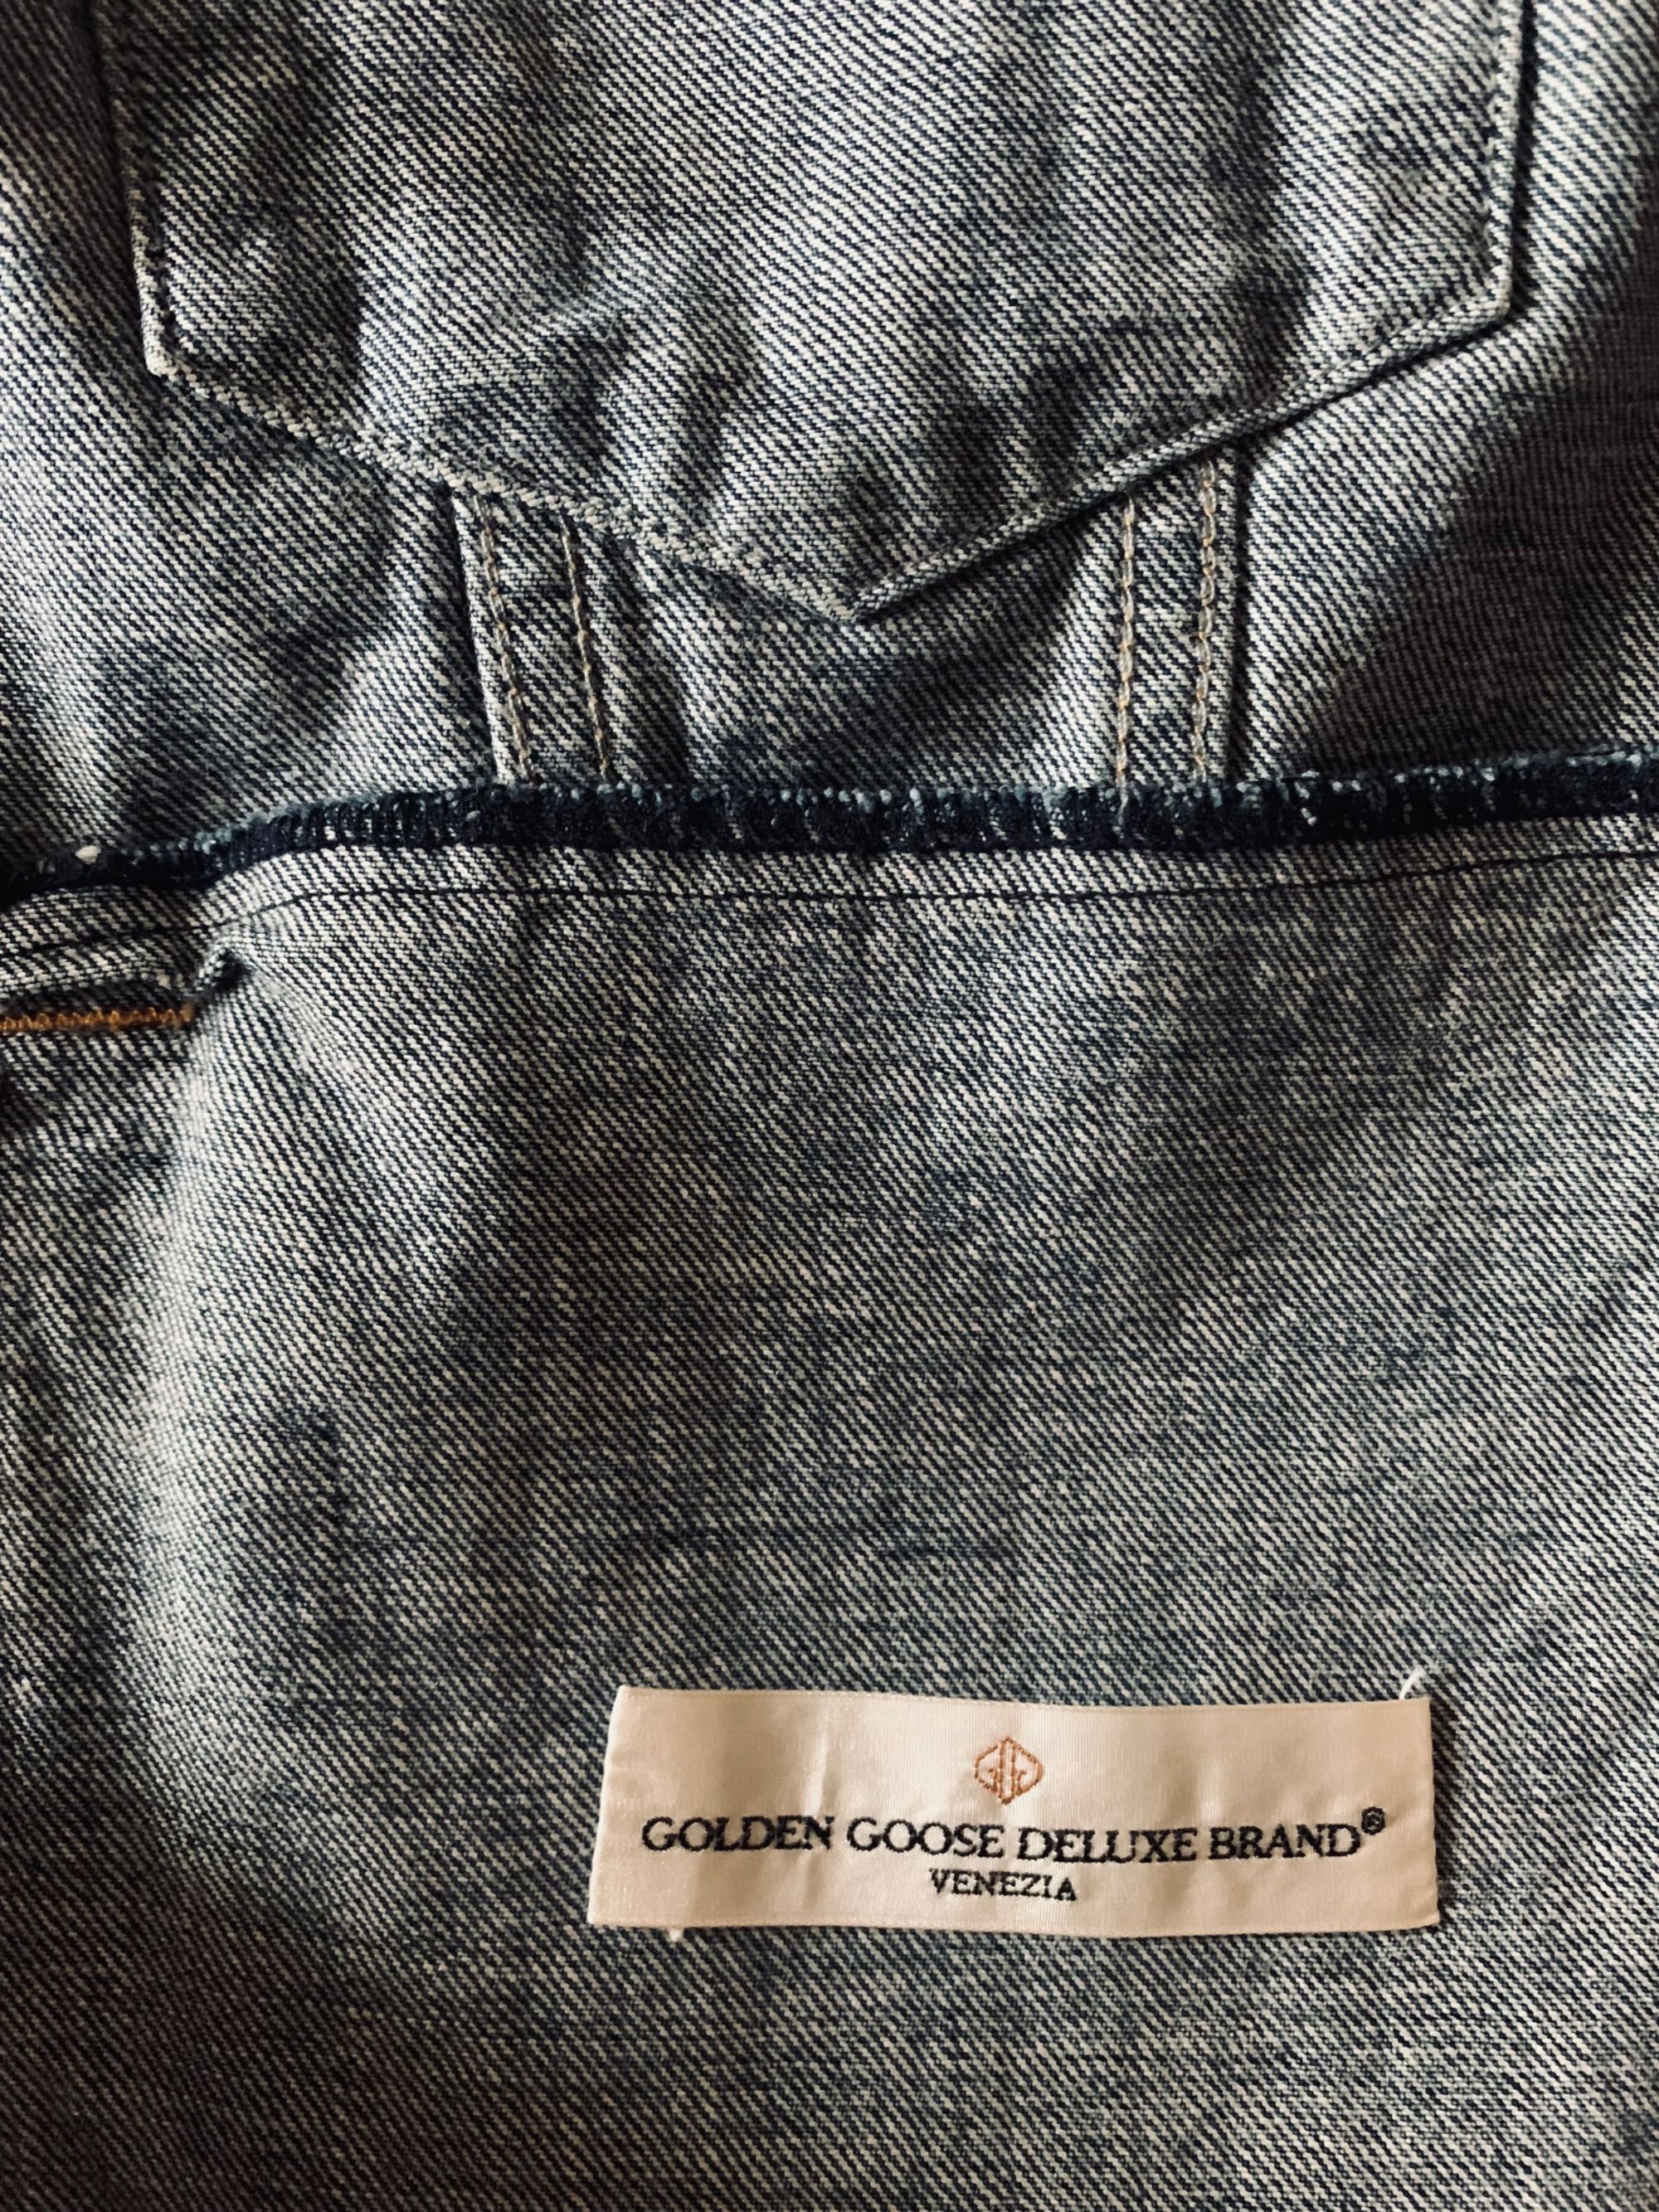 Джинсова куртка італійського бренду Golden Goose Deluxe Brand